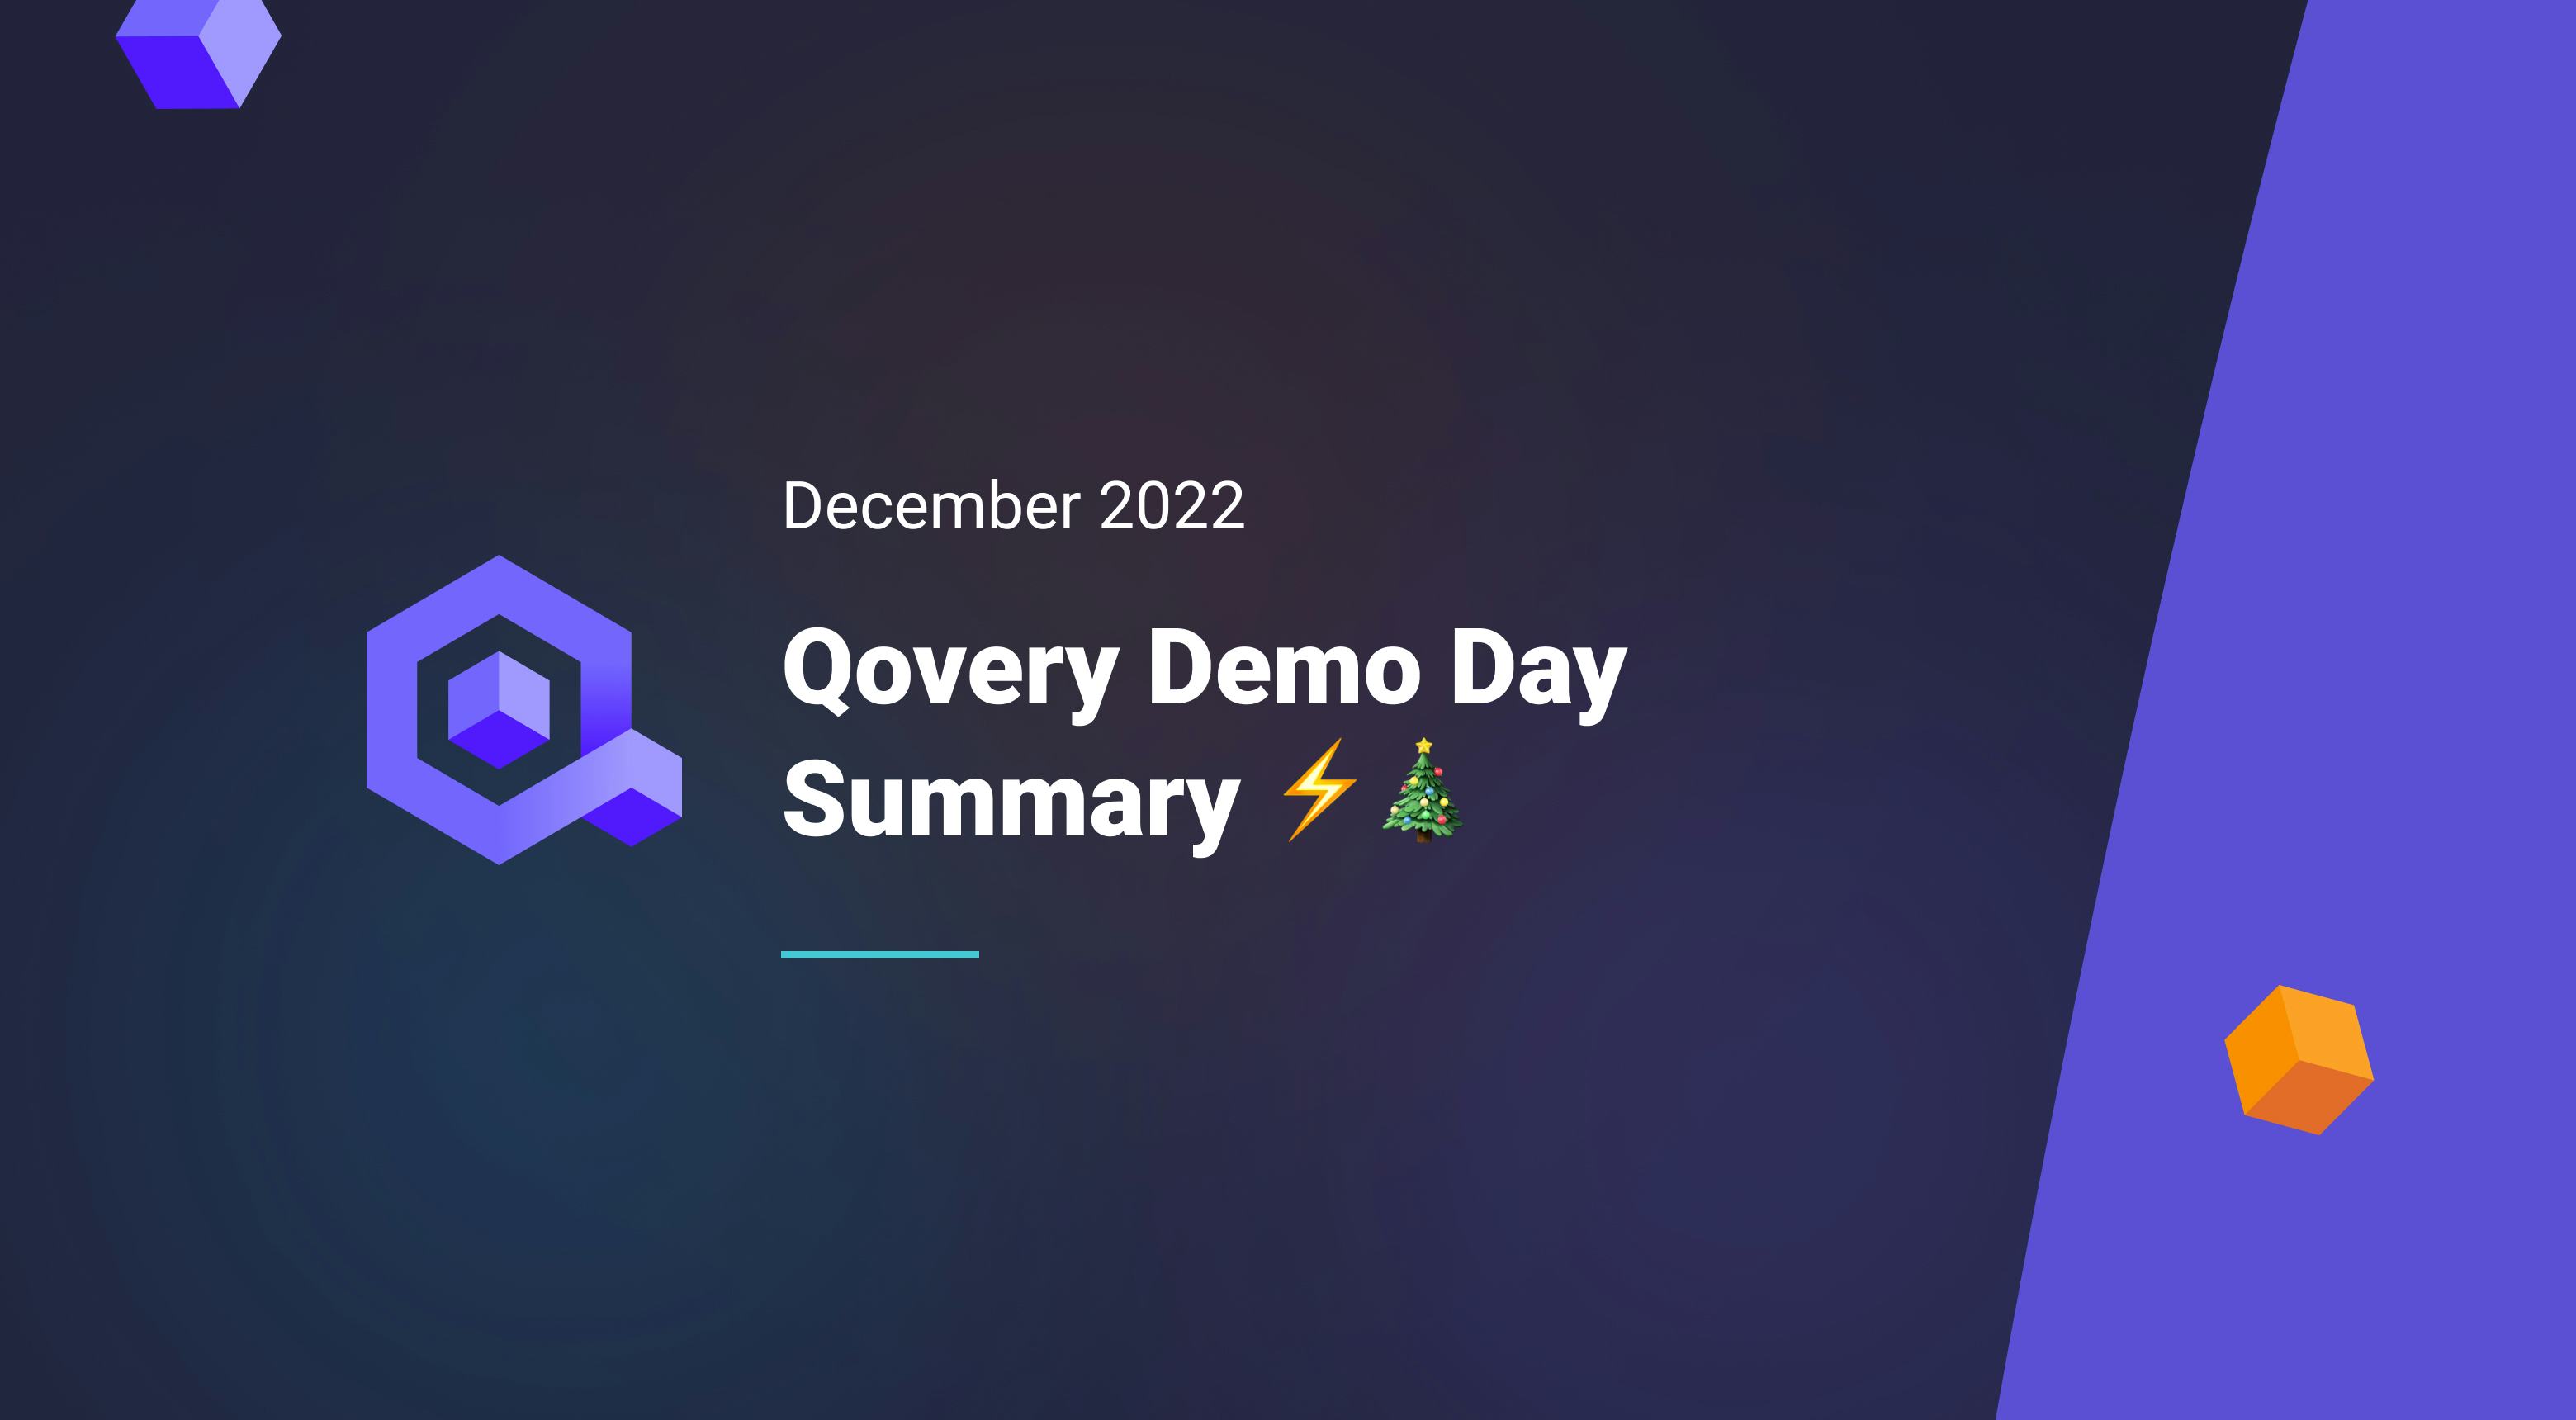 Qovery Demo Day Summary - December 2022